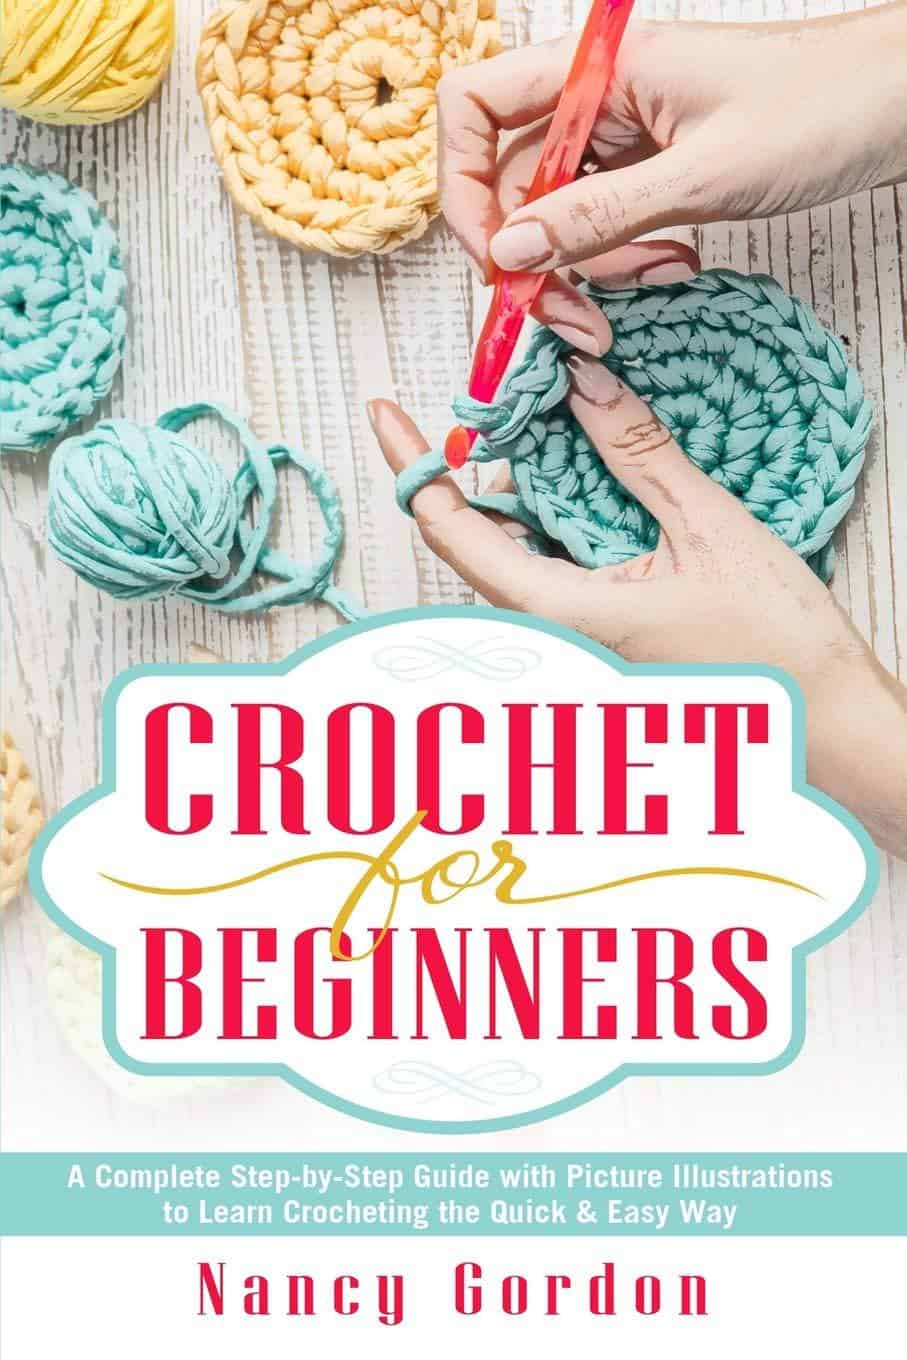 16 Best Crochet Books for Beginners and Beyond - Sarah Maker